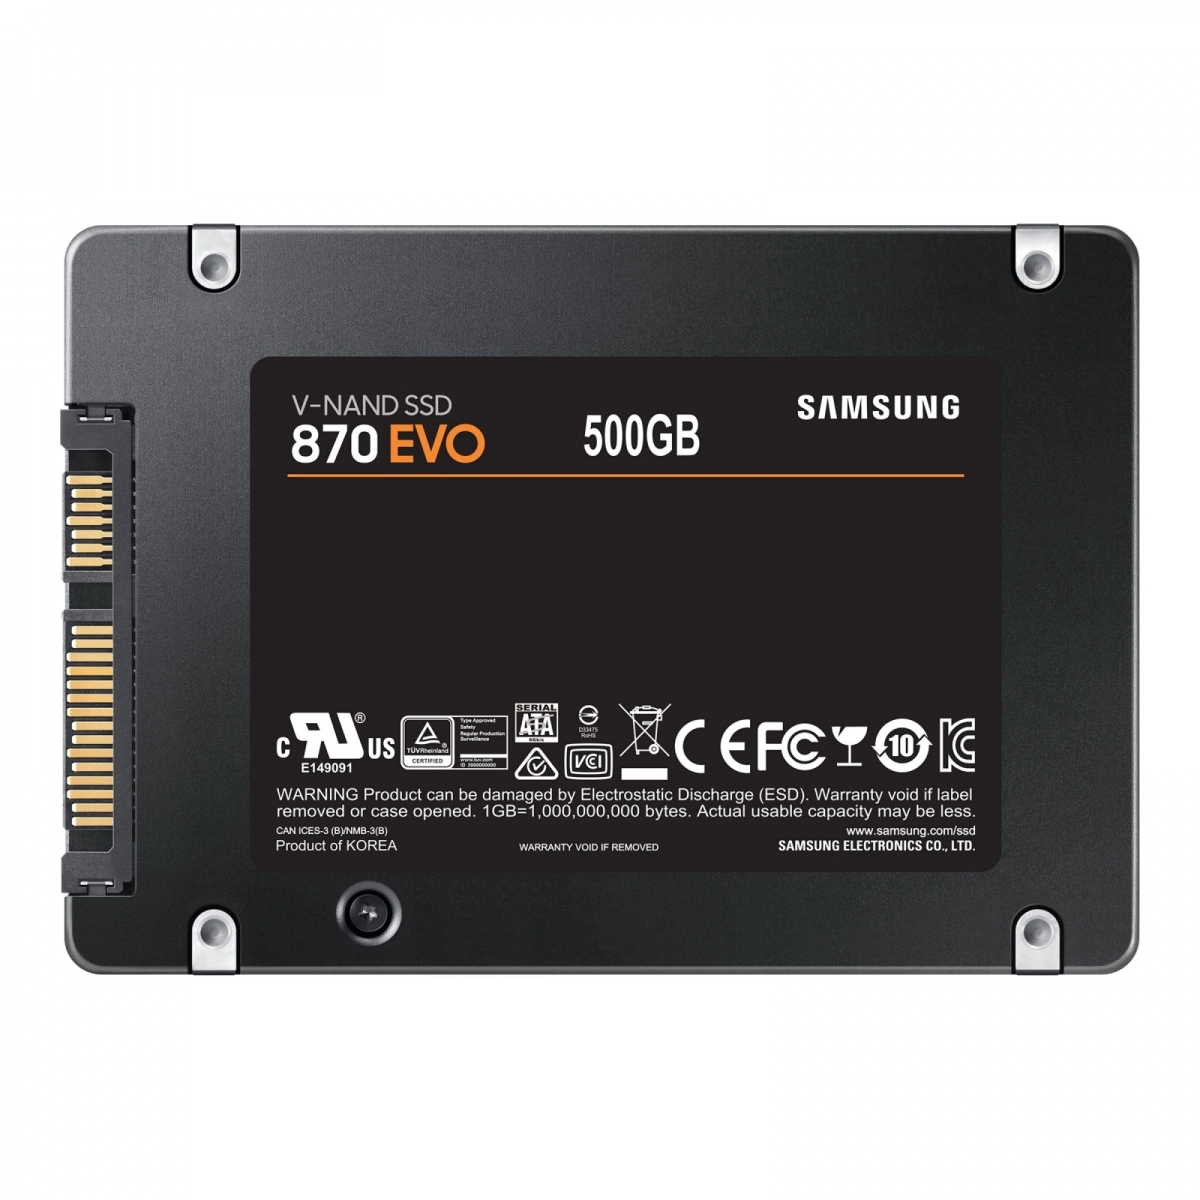 Notebook-Festplatte 500GB, SSD SATA3 MLC für LENOVO ThinkPad R61 (7732)